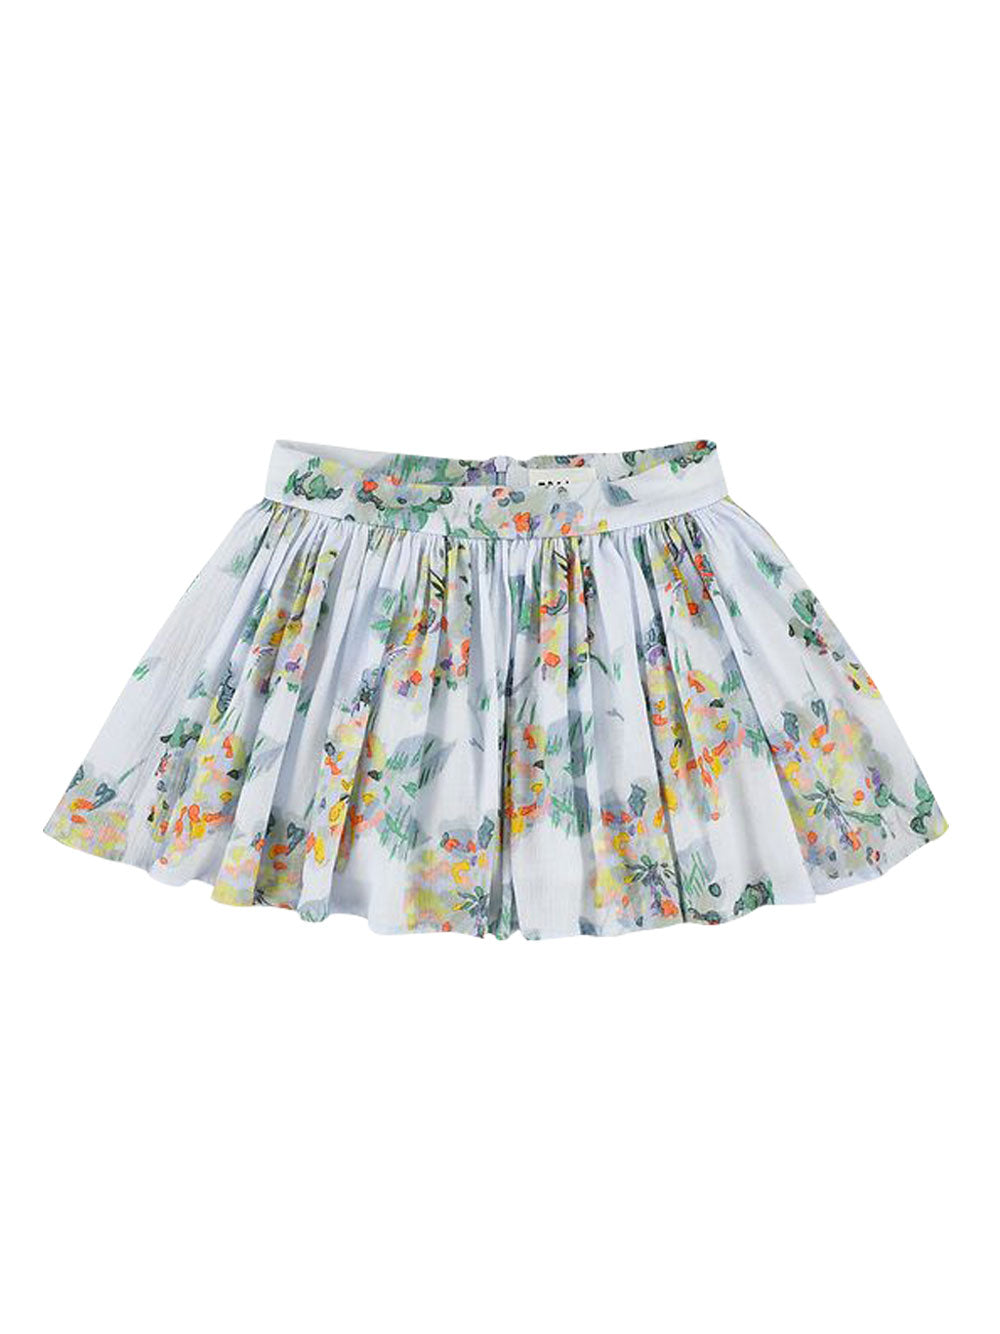 Sprint Fallingflower Skirt